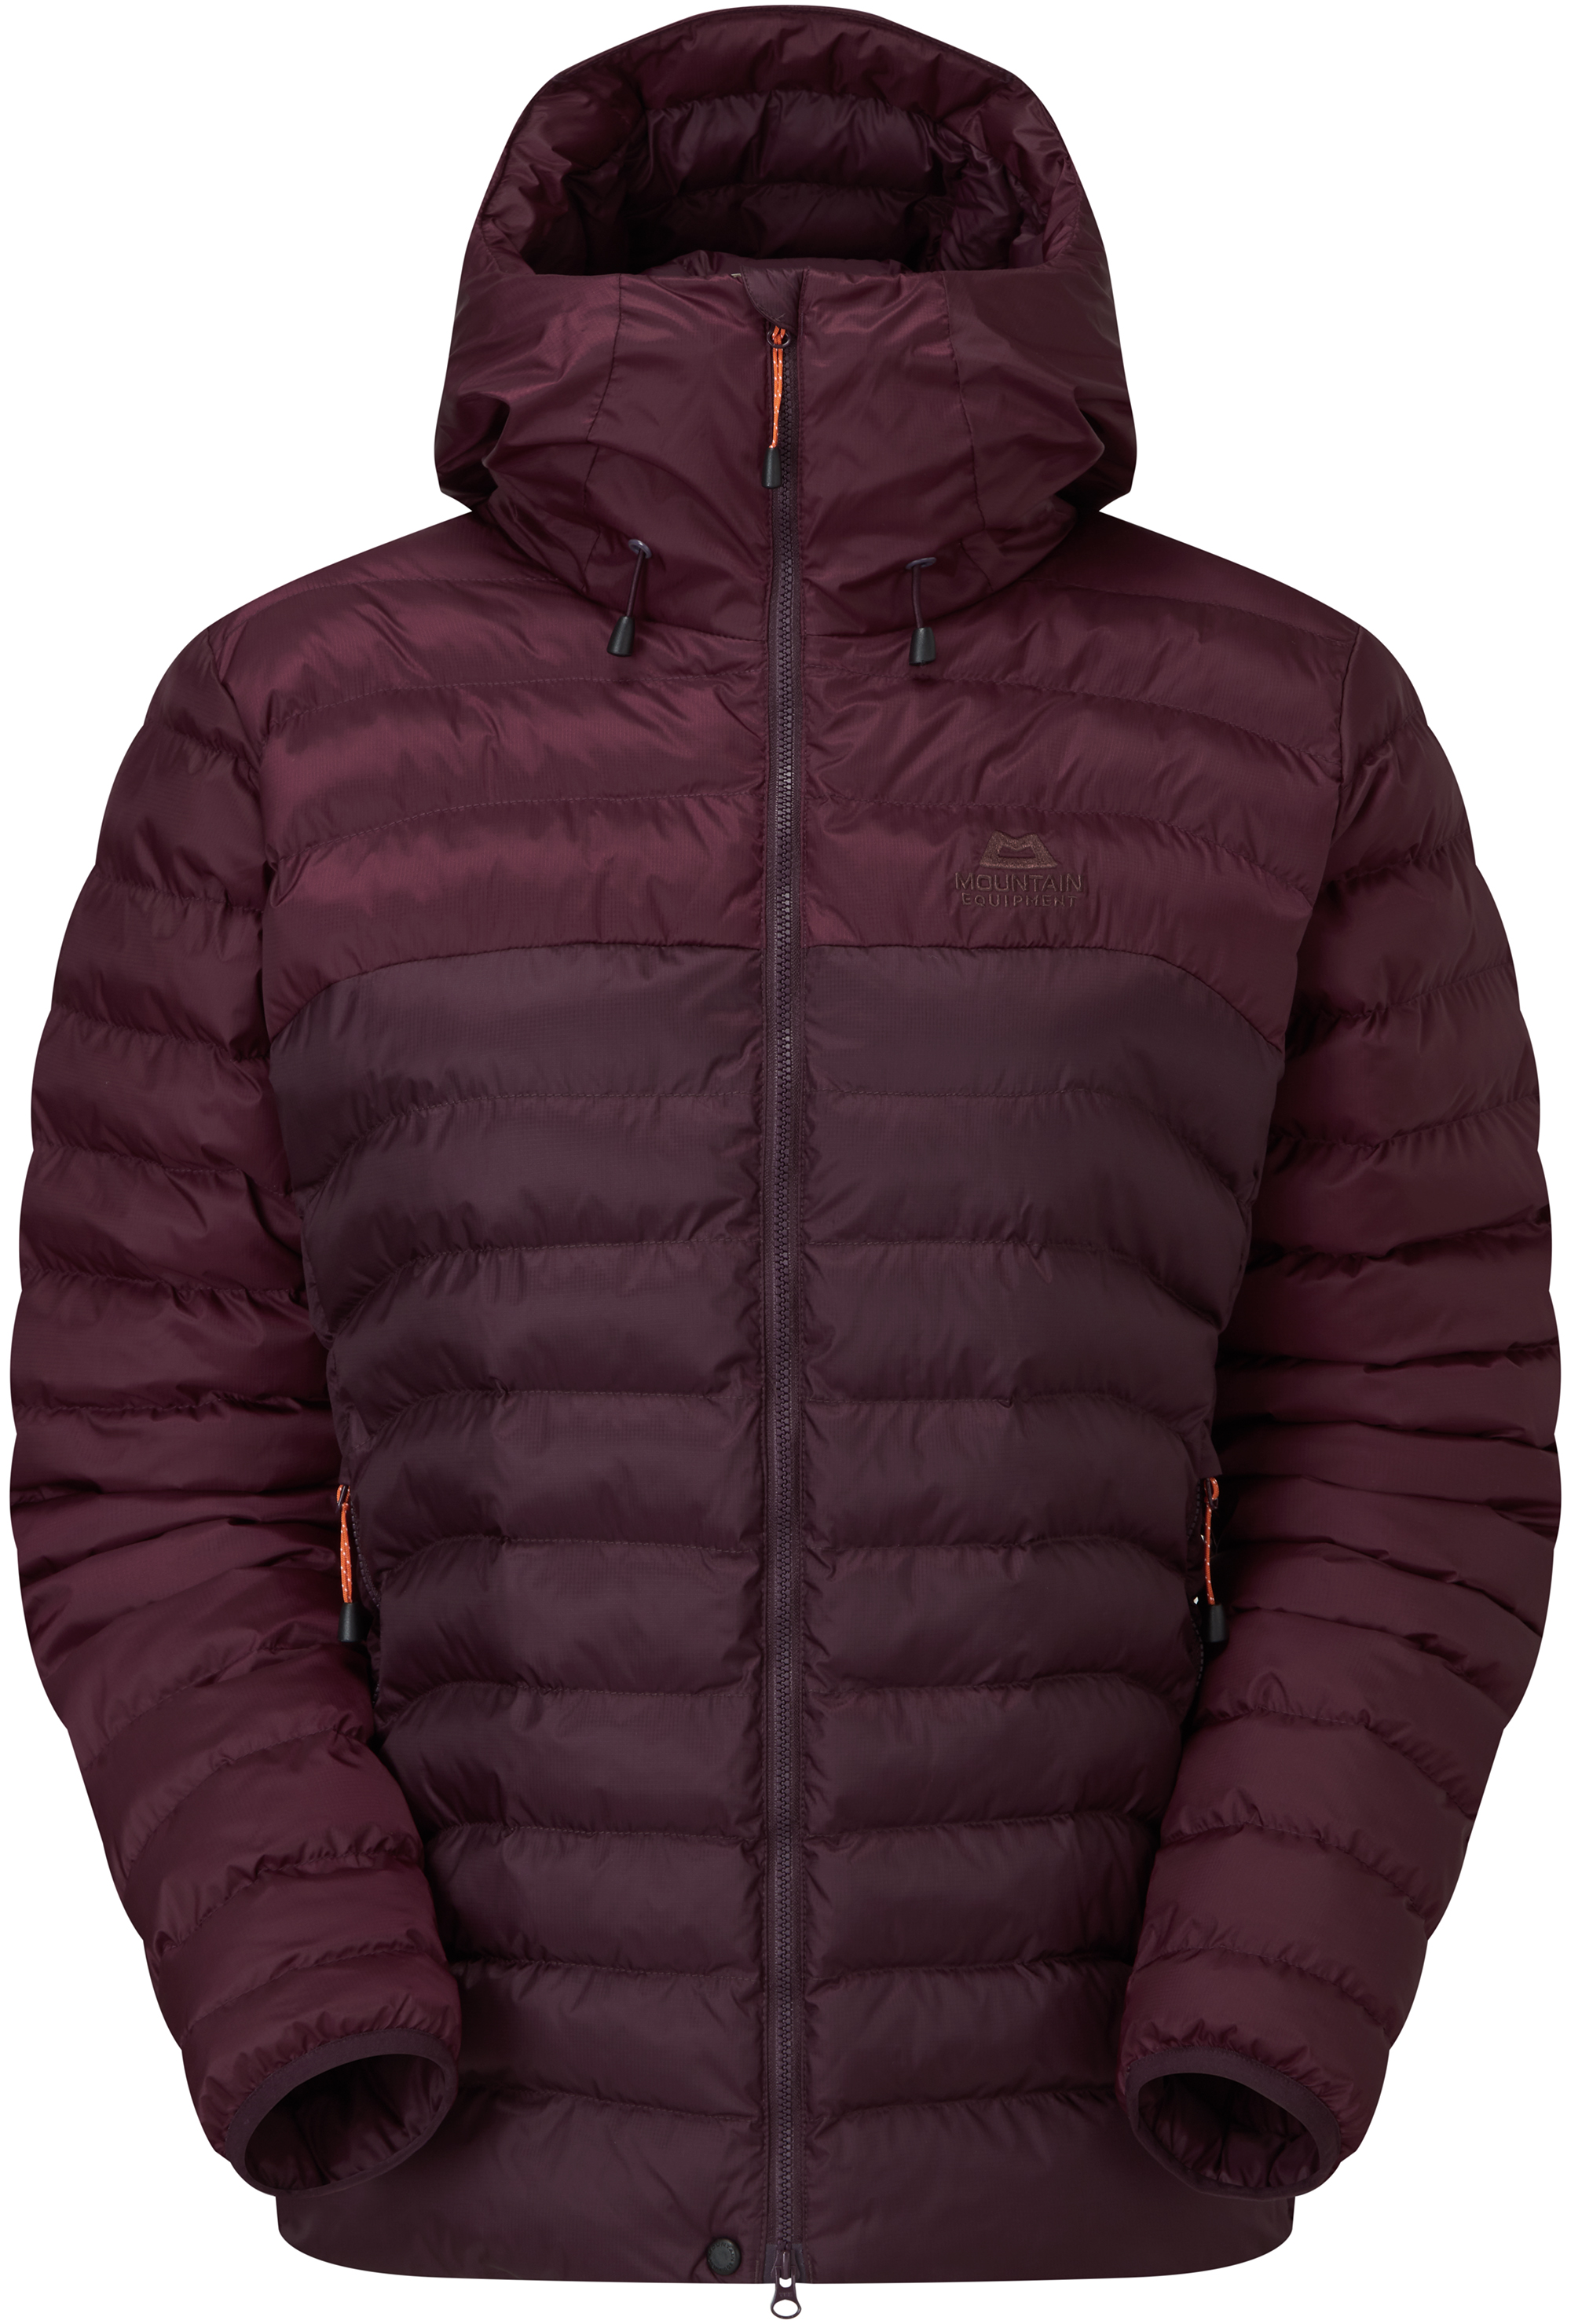 Mountain Equipment dámská zateplovací bunda Superflux wmns Jacket Barva: Raisin/Mulberry, Velikost: 14/L